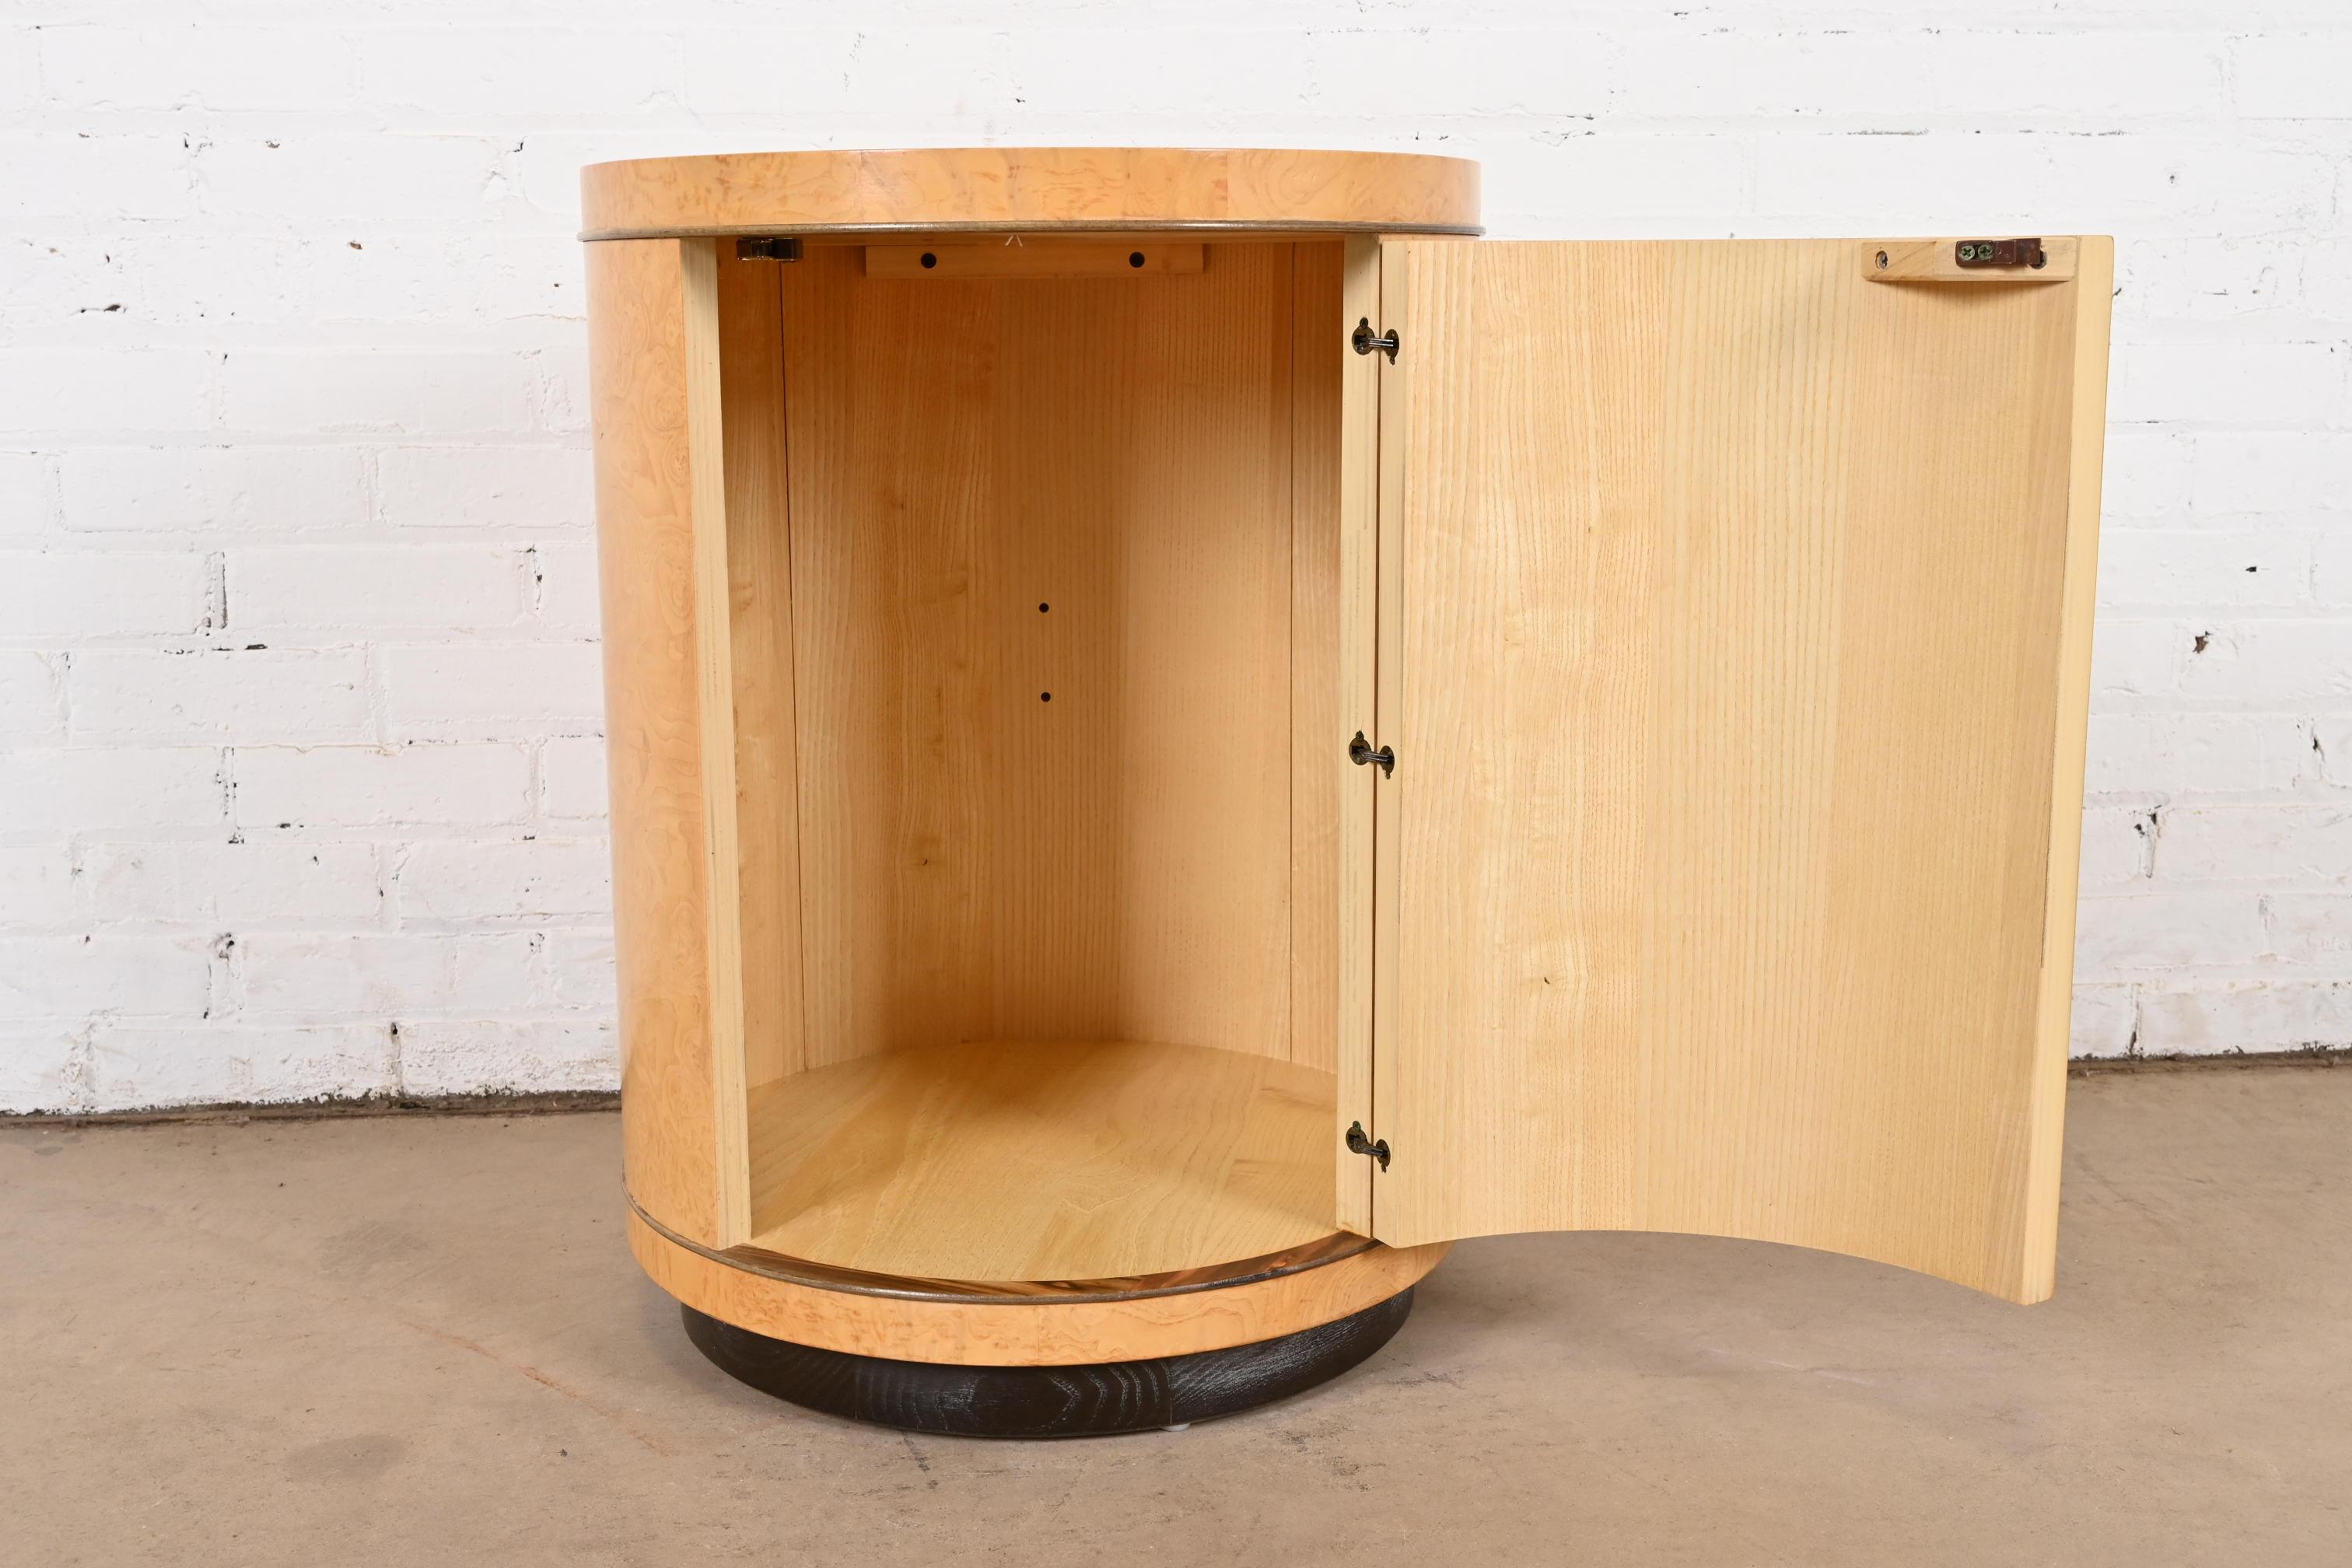 Milo Baughman Style Burl Wood Drum Side Table by Henredon For Sale 2